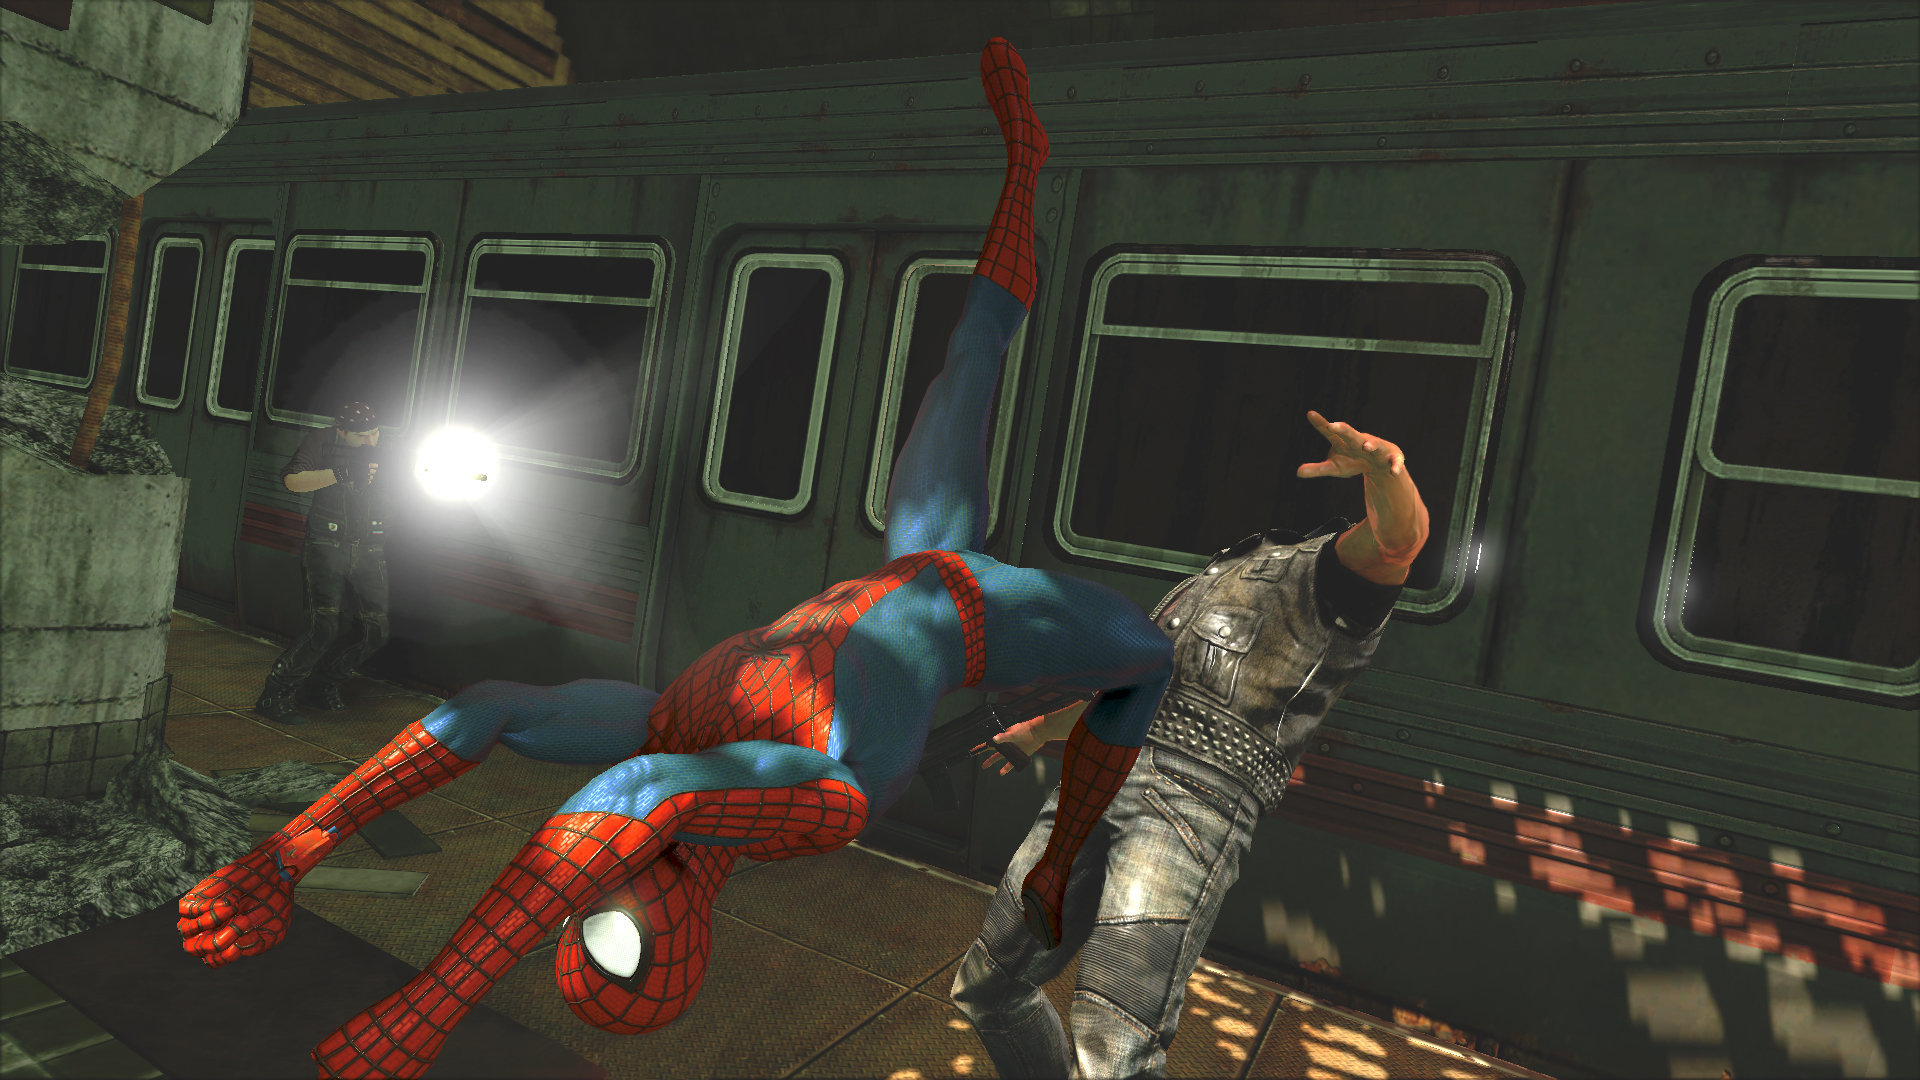 Amazing spiderman 2 game torrent kickass